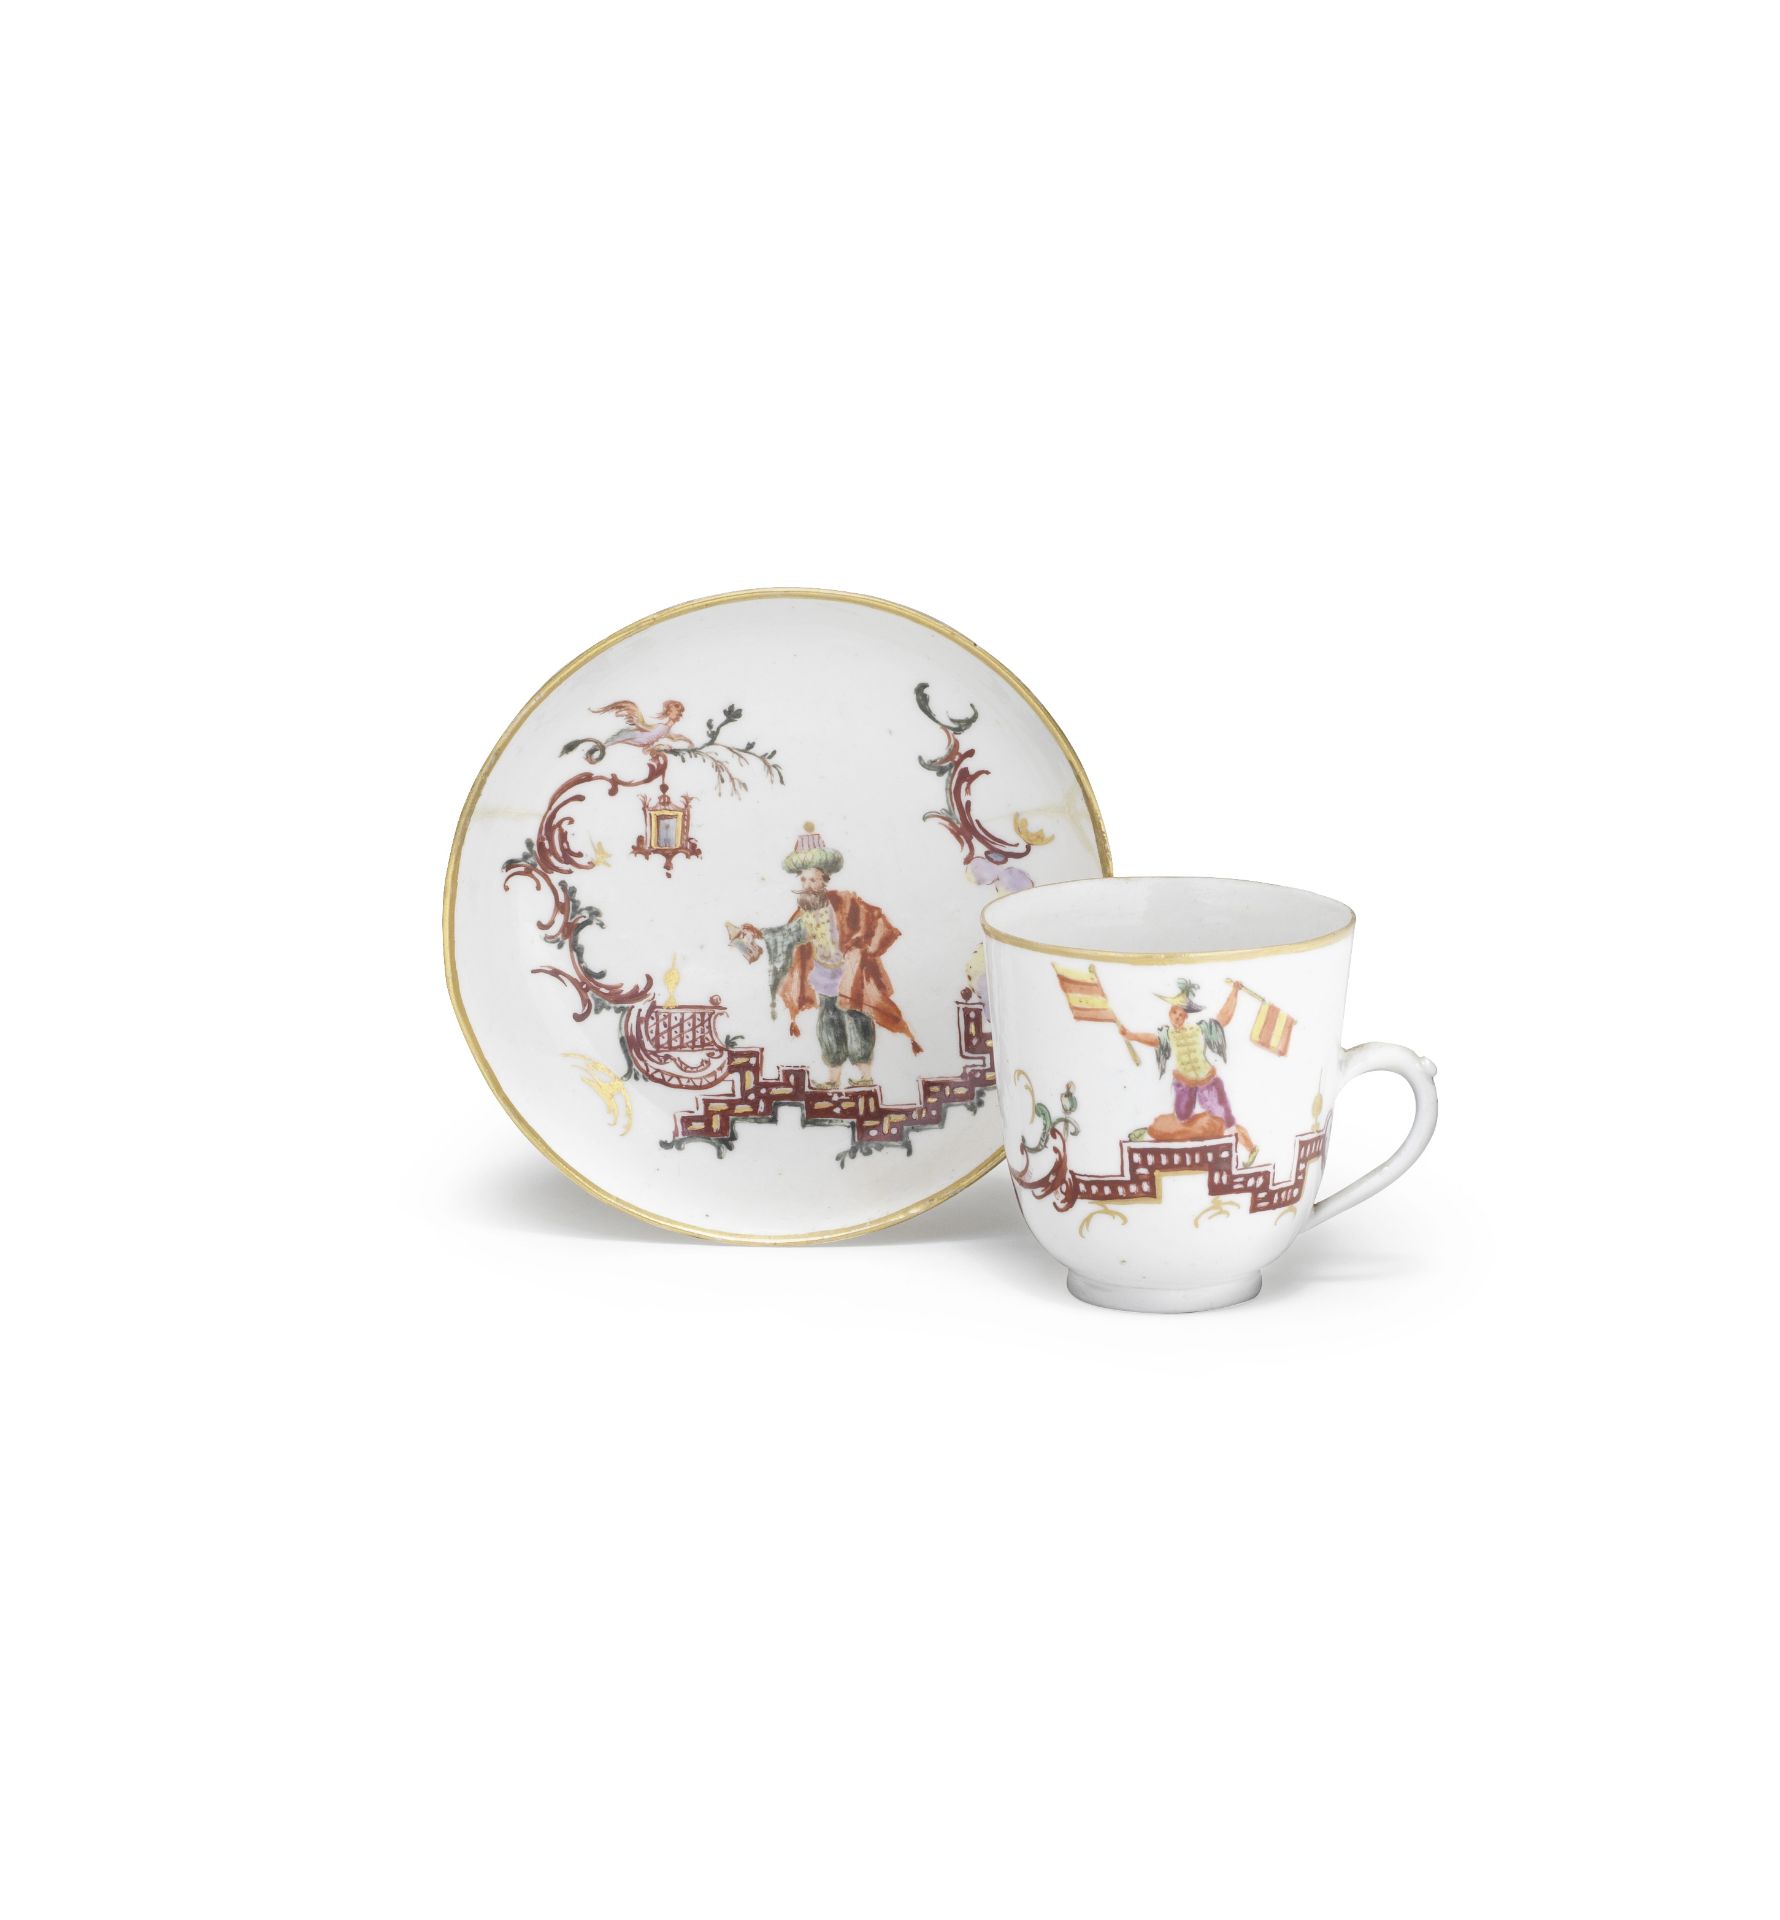 A Le Nove, Pasquale Antonibon manufactury, porcelain cup and saucer, circa 1765-1770